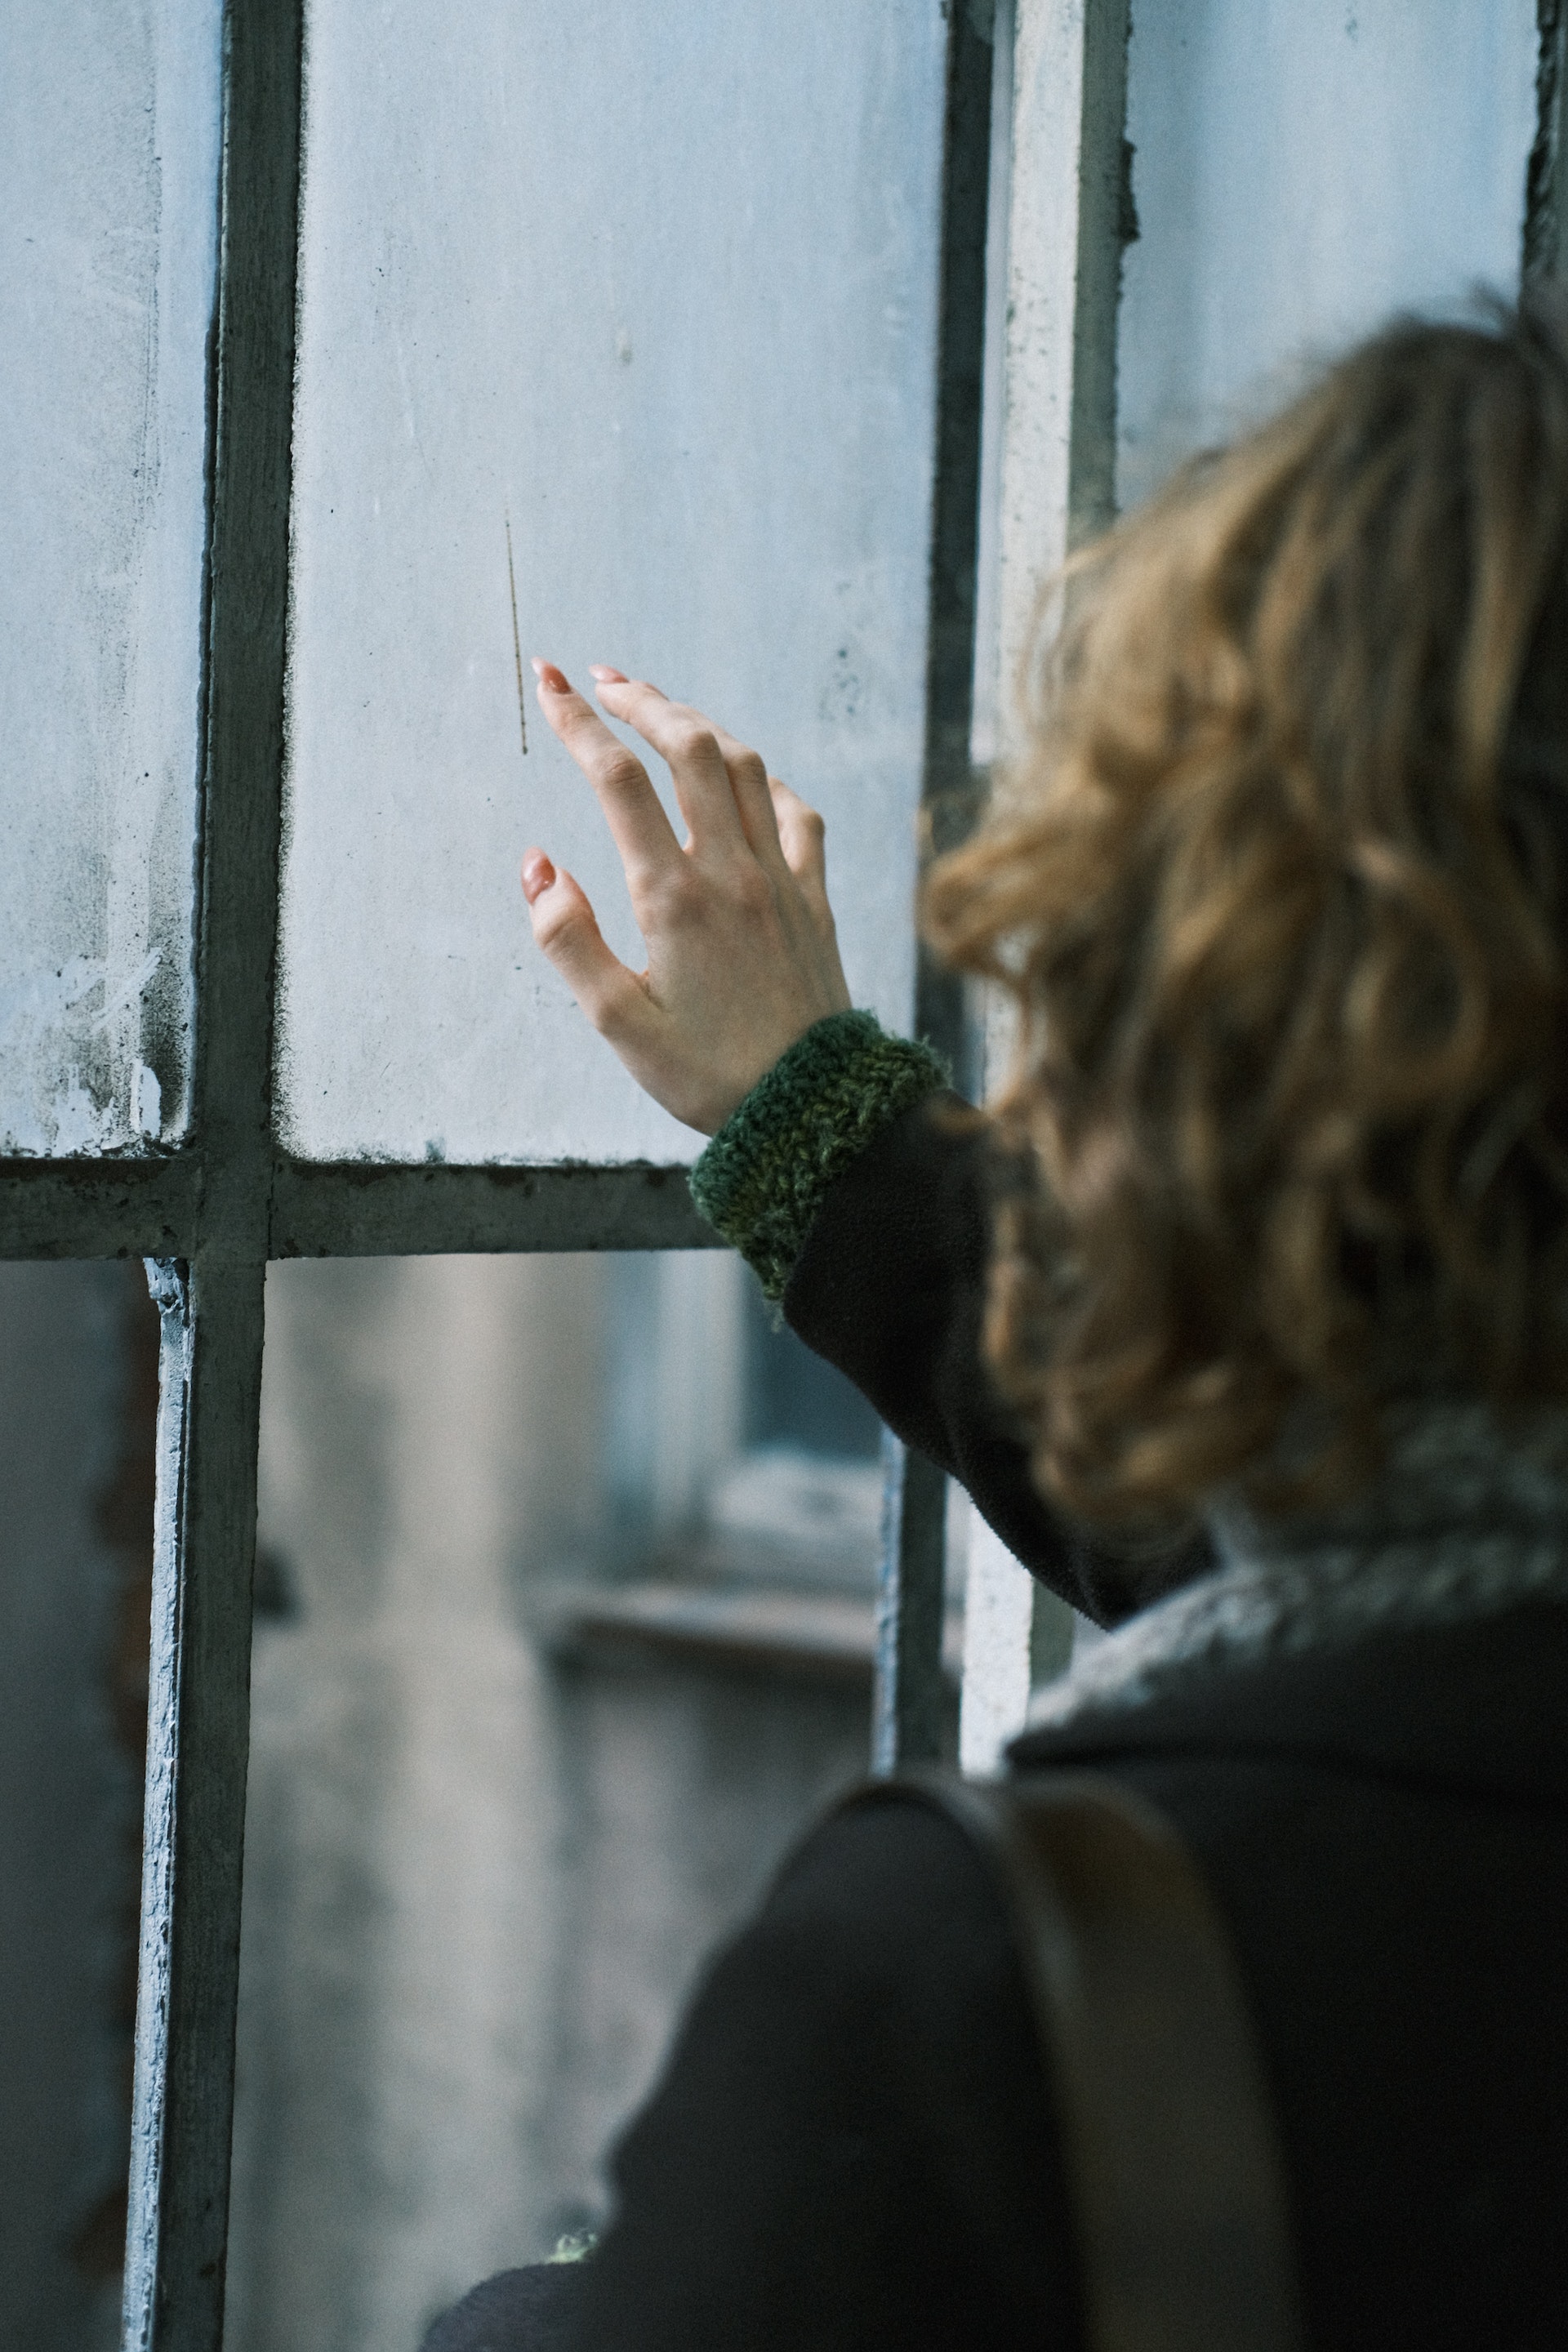 A woman touching a glass window | Source: Pexels